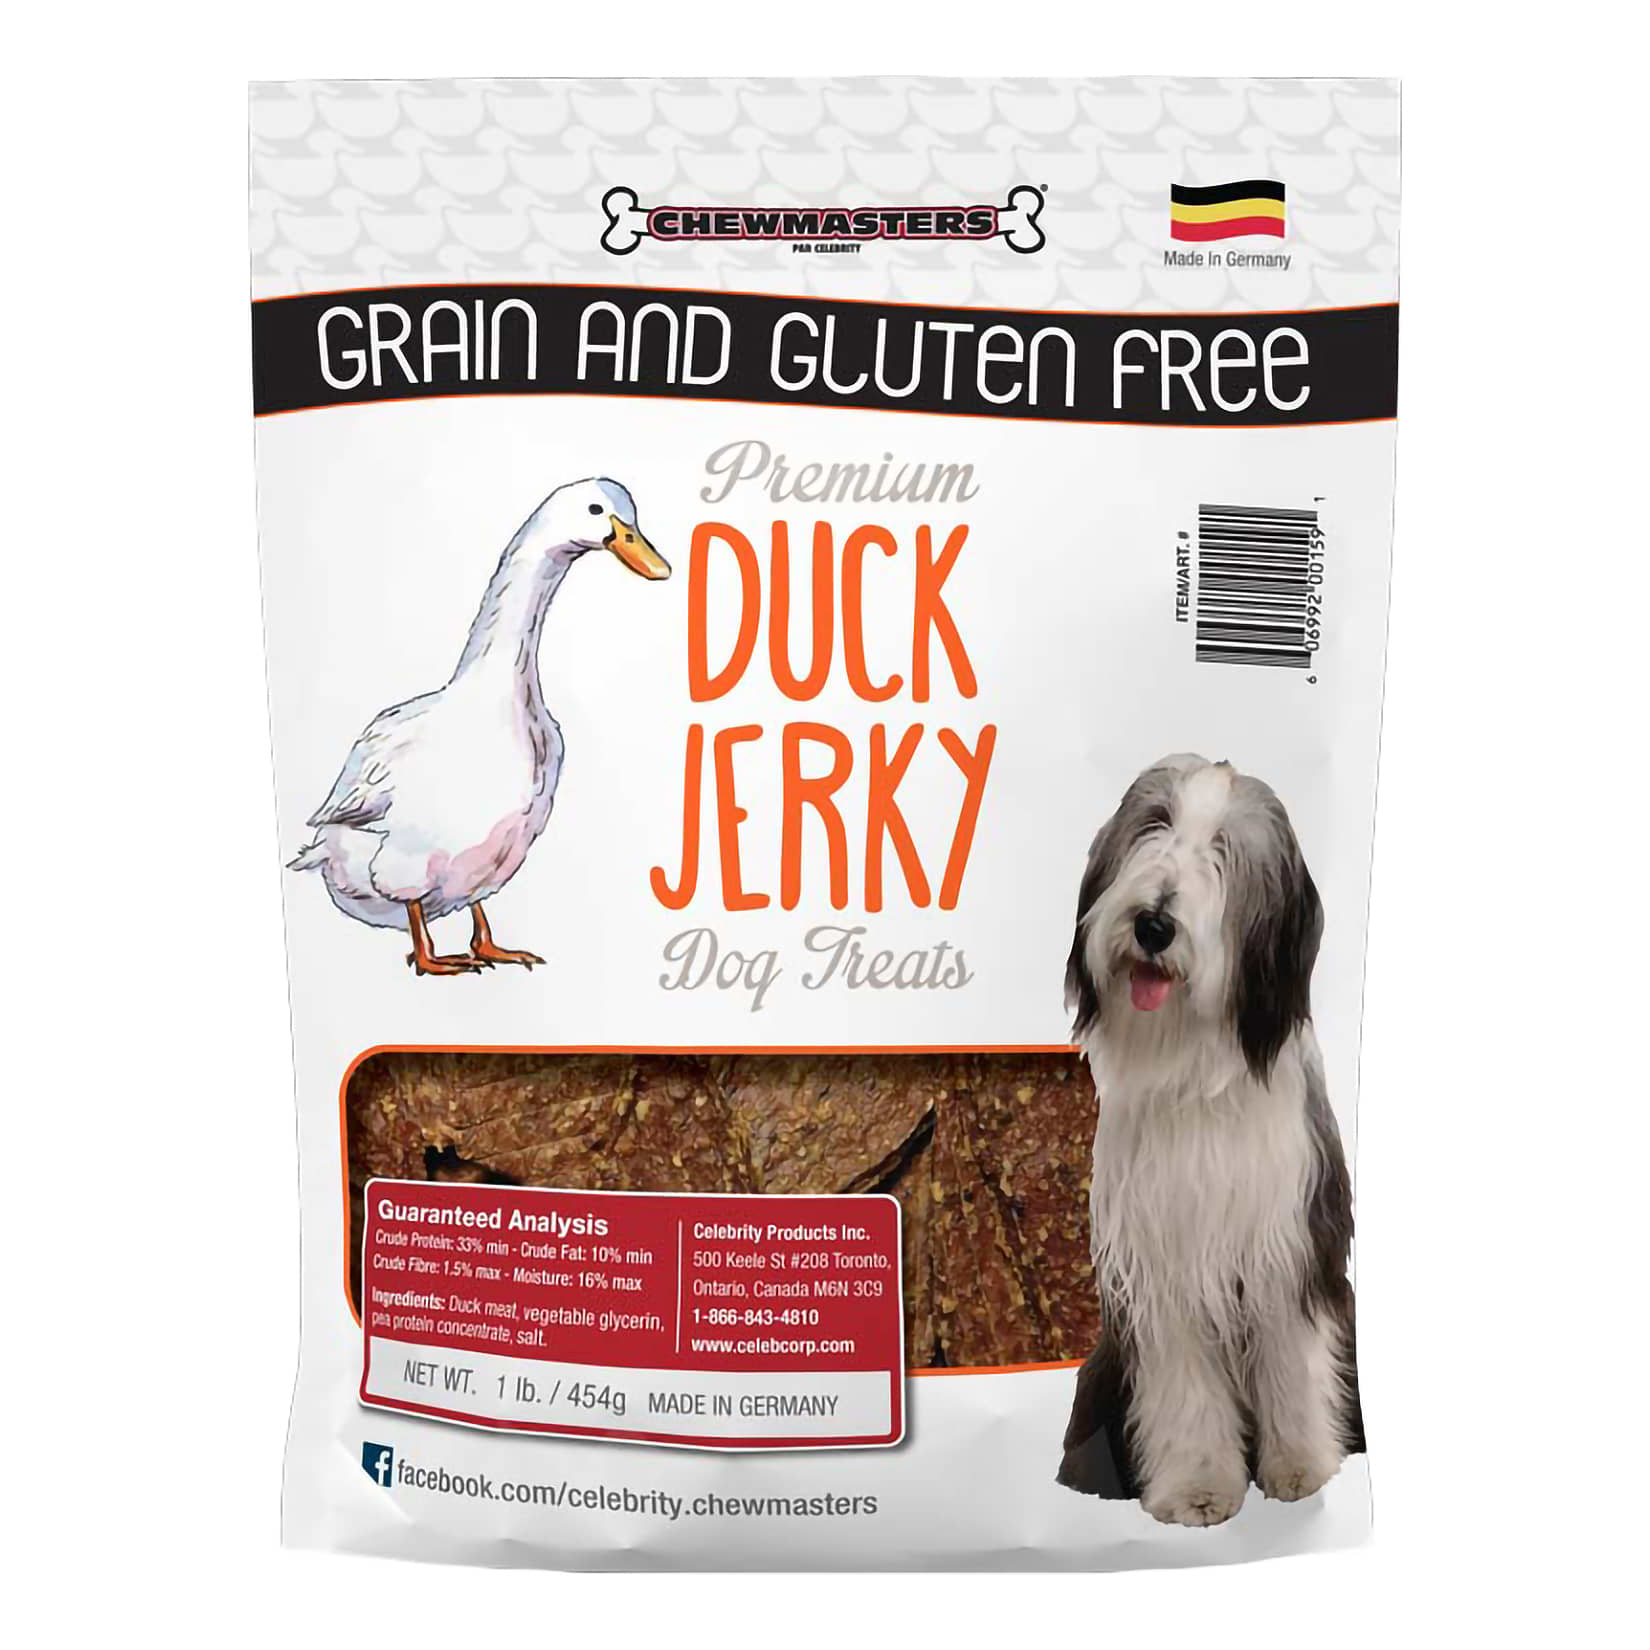 Chewmasters Premium Duck Jerky